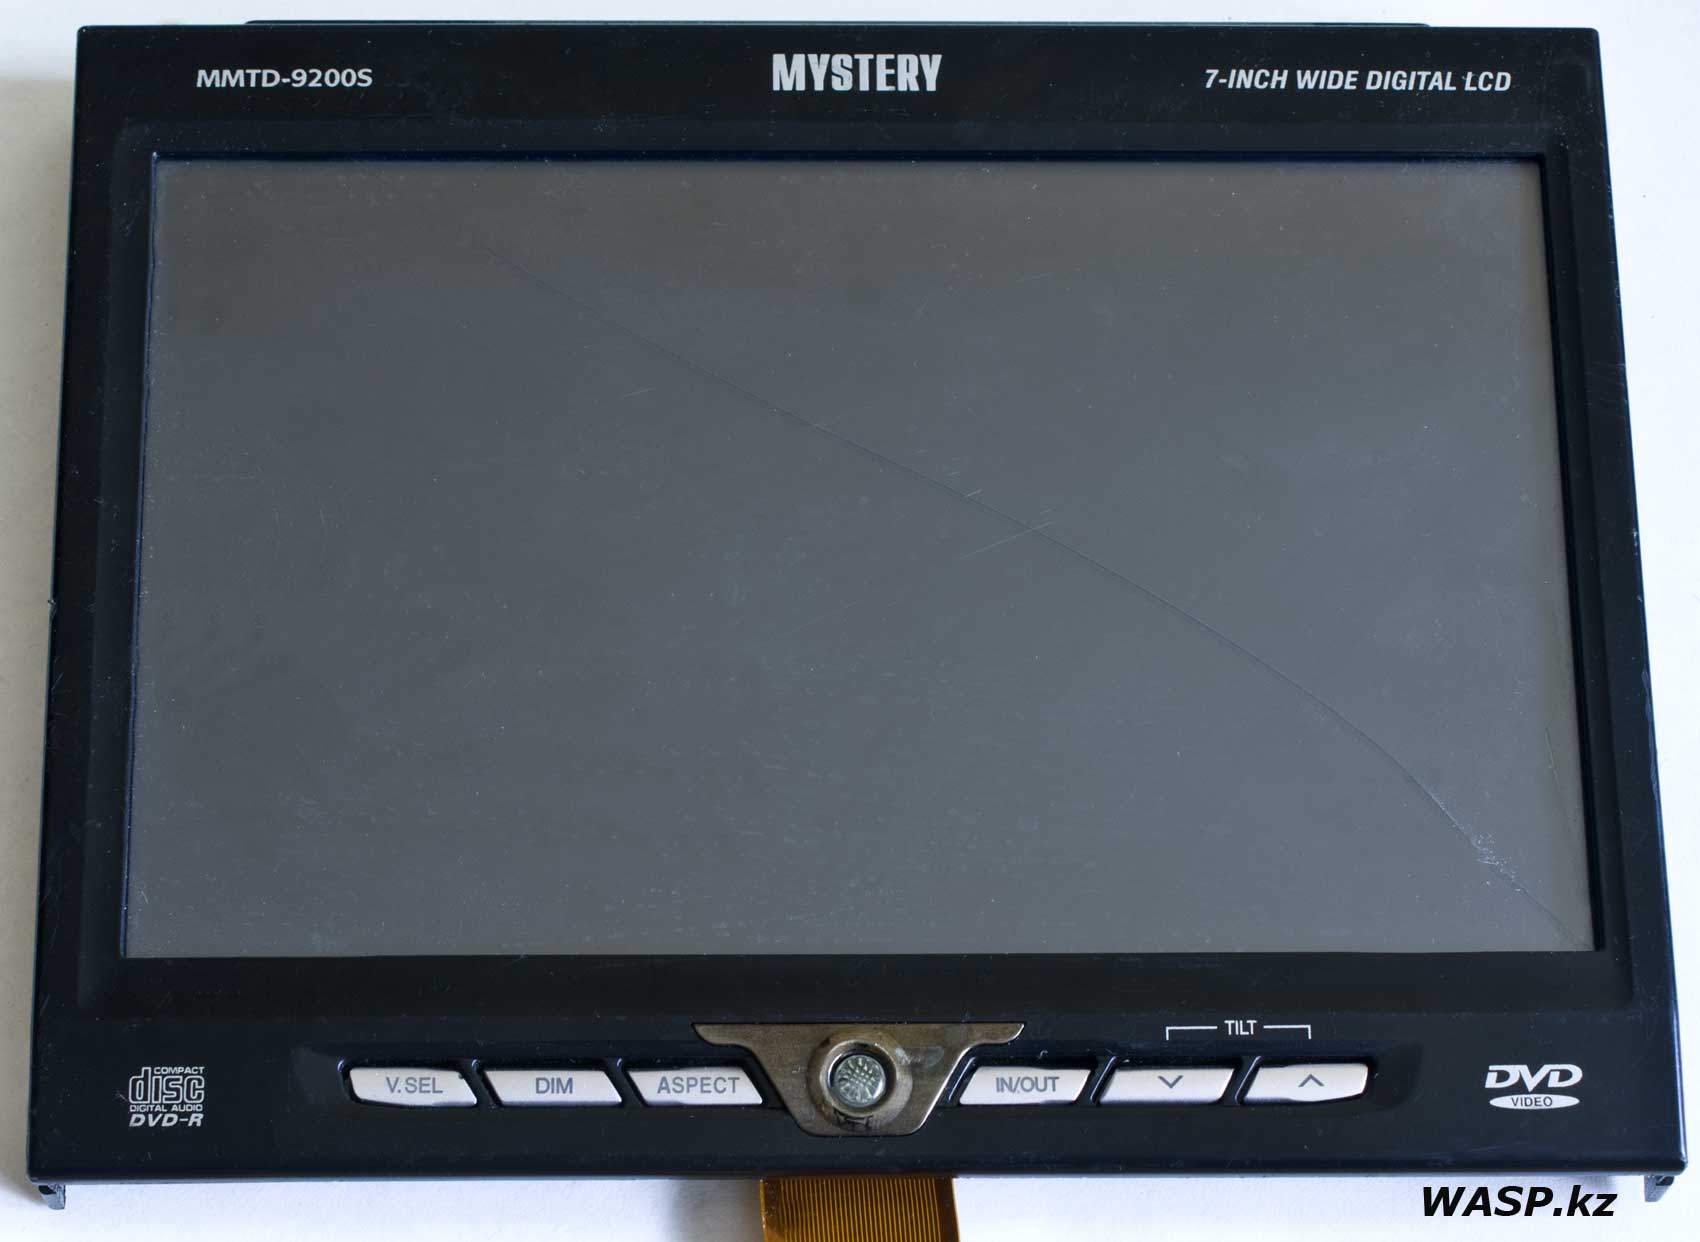 Mystery MMTD-9200S ЖК экран магнитолы, описание